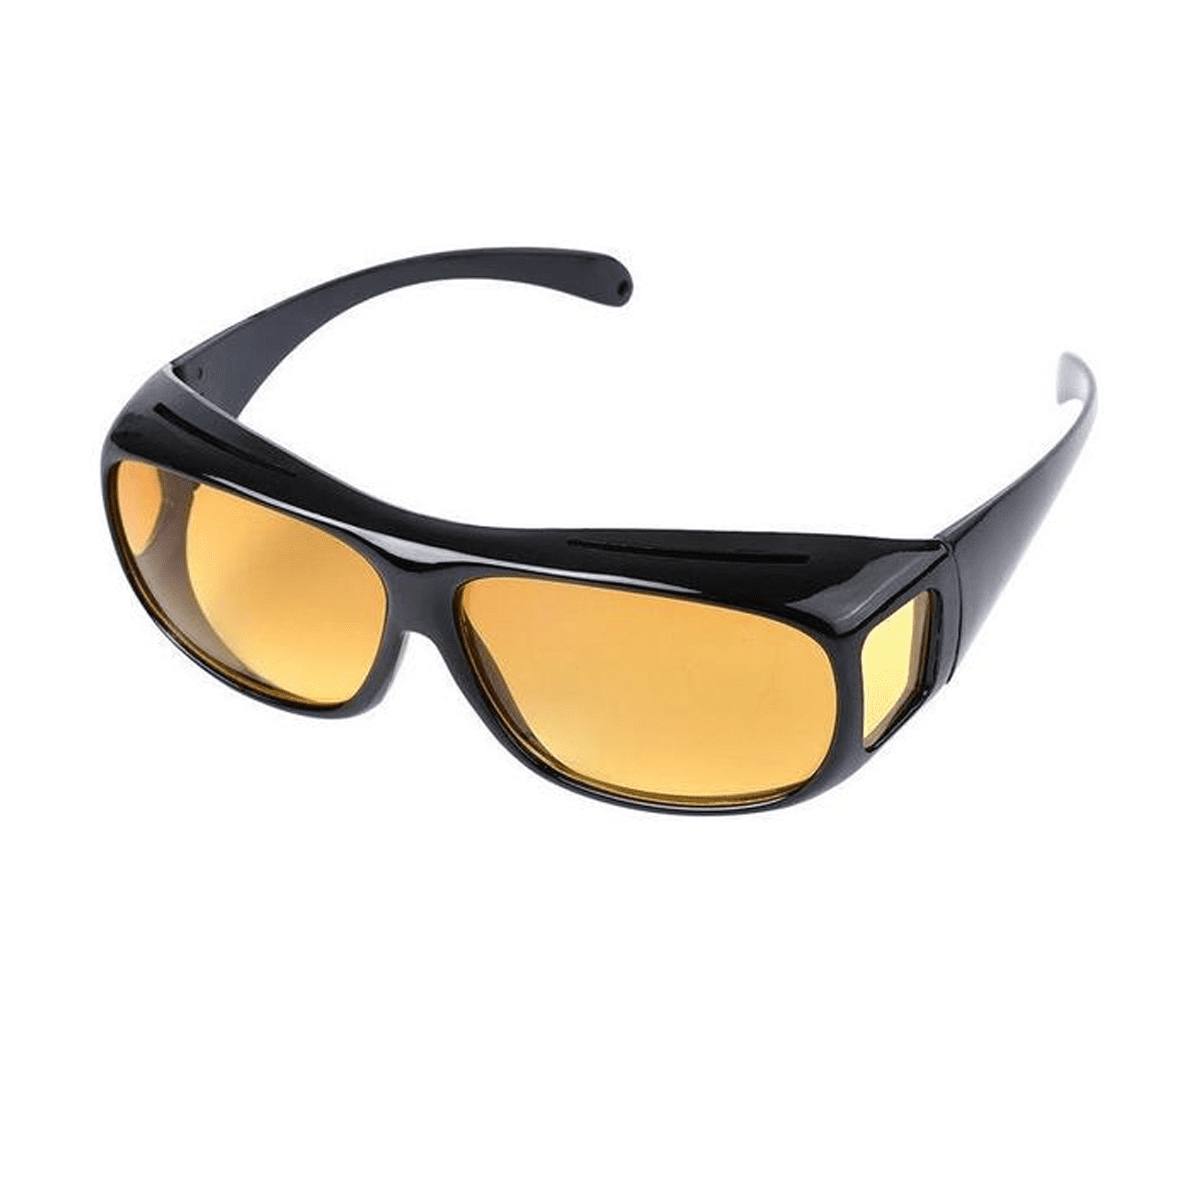 Unisex Night Optic Vision Driving Anti Glare HD UV Protection Sunglasses